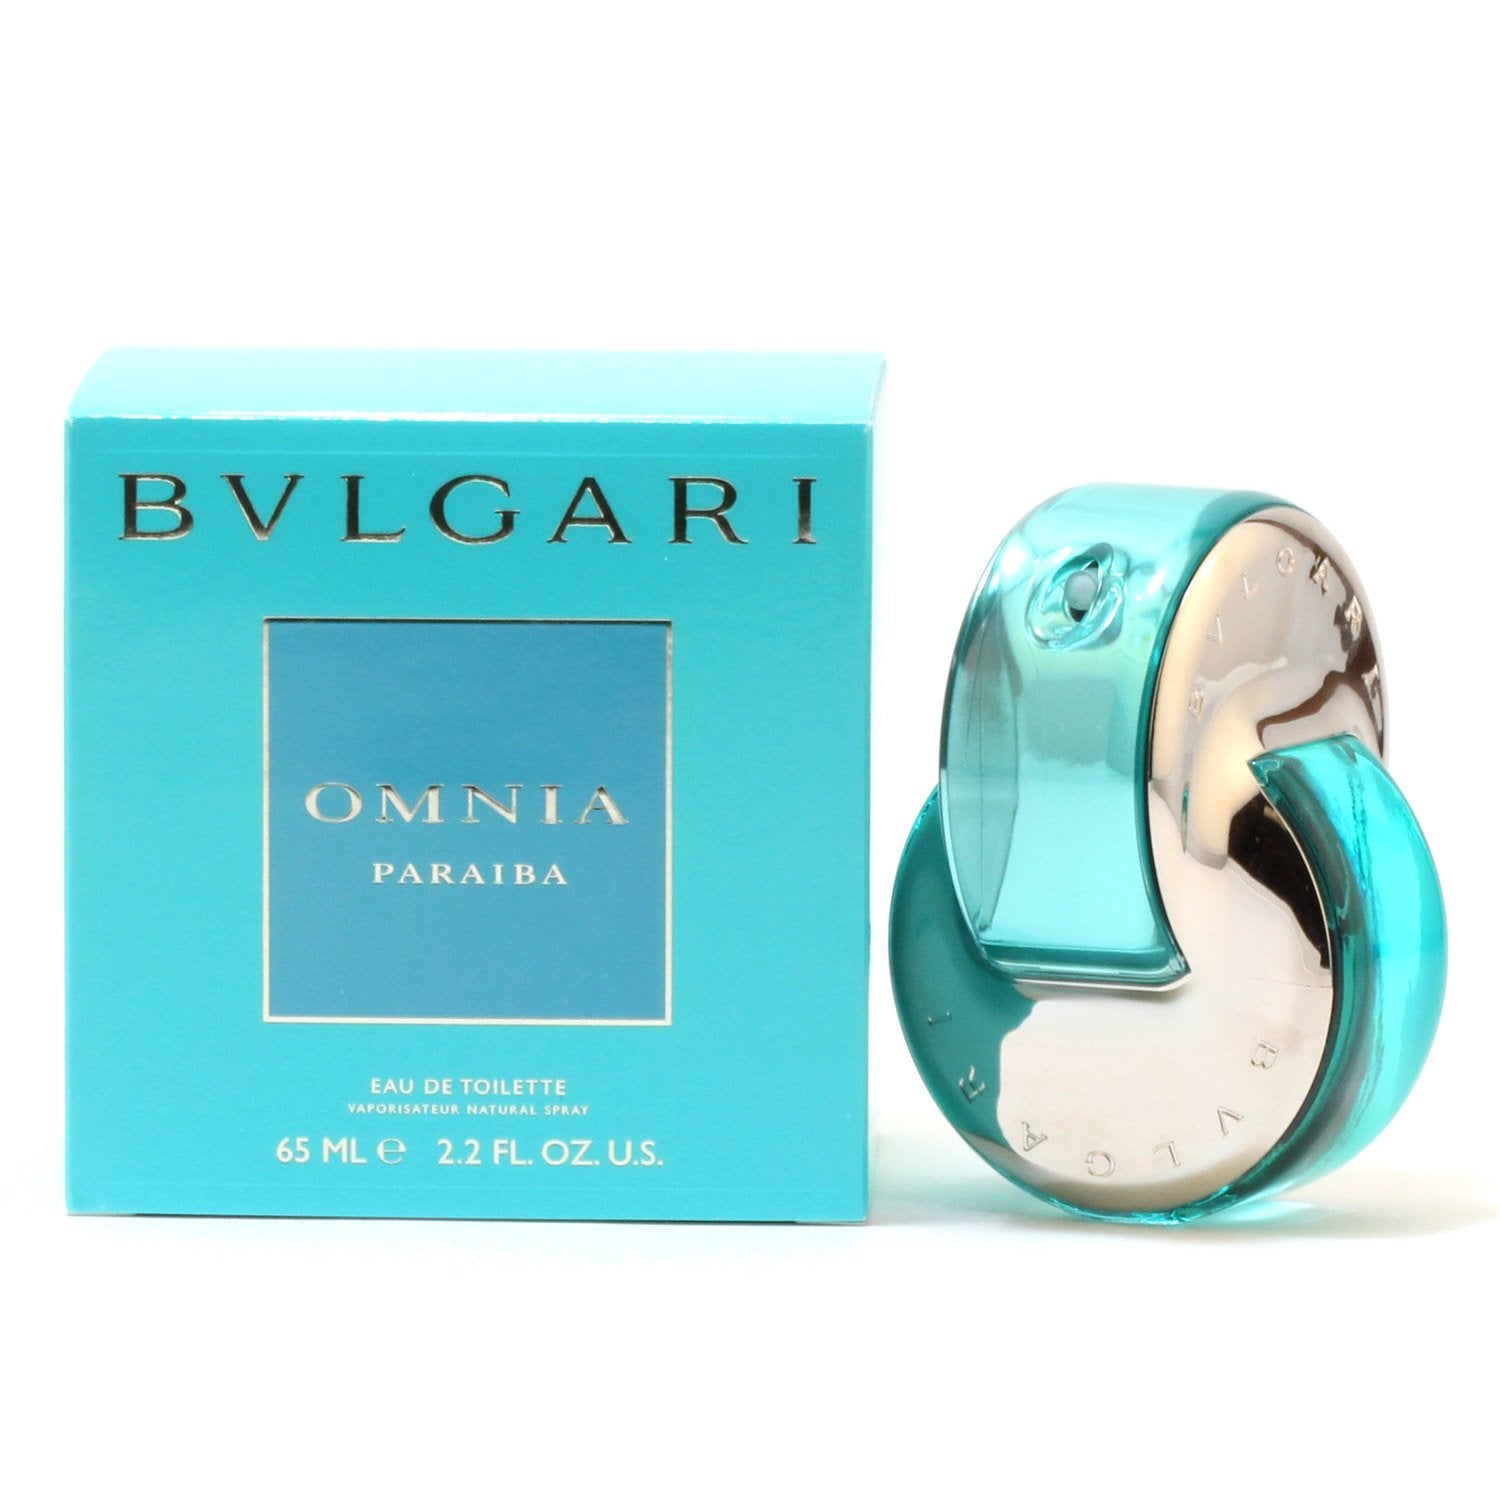 Perfume - BVLGARI OMNIA PARAIBA FOR WOMEN - EAU DE TOILETTE SPRAY